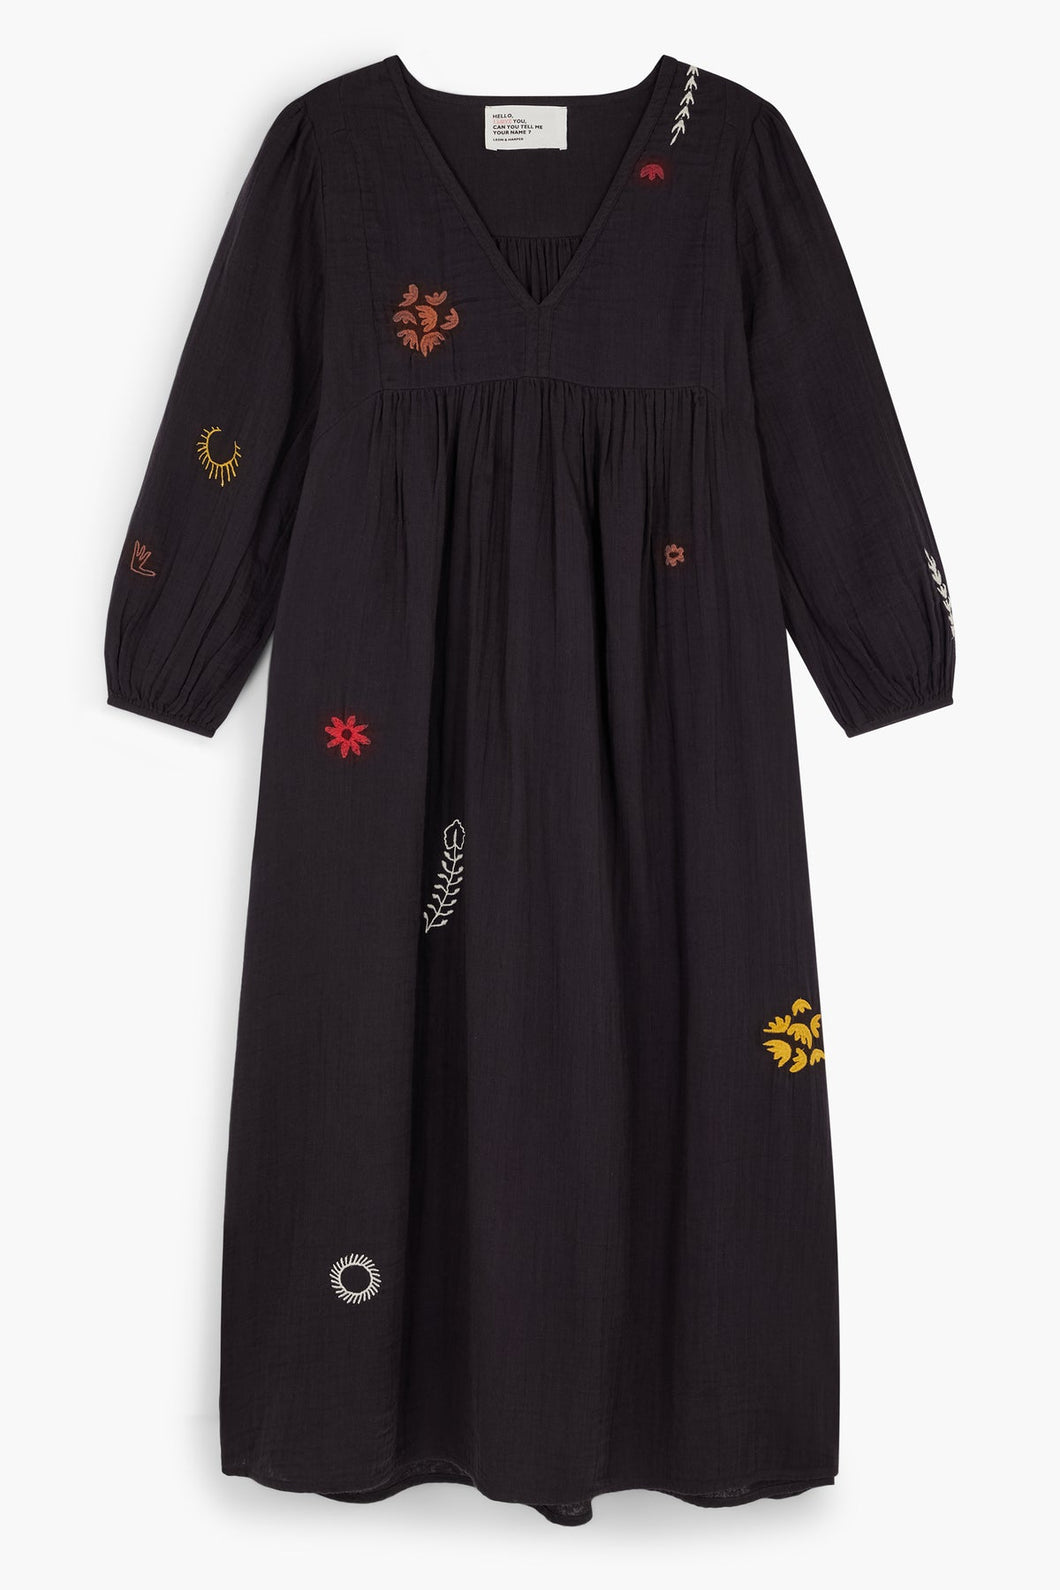 Leon & Harper  Romaine Brod + Carbone Long sleeve Dress